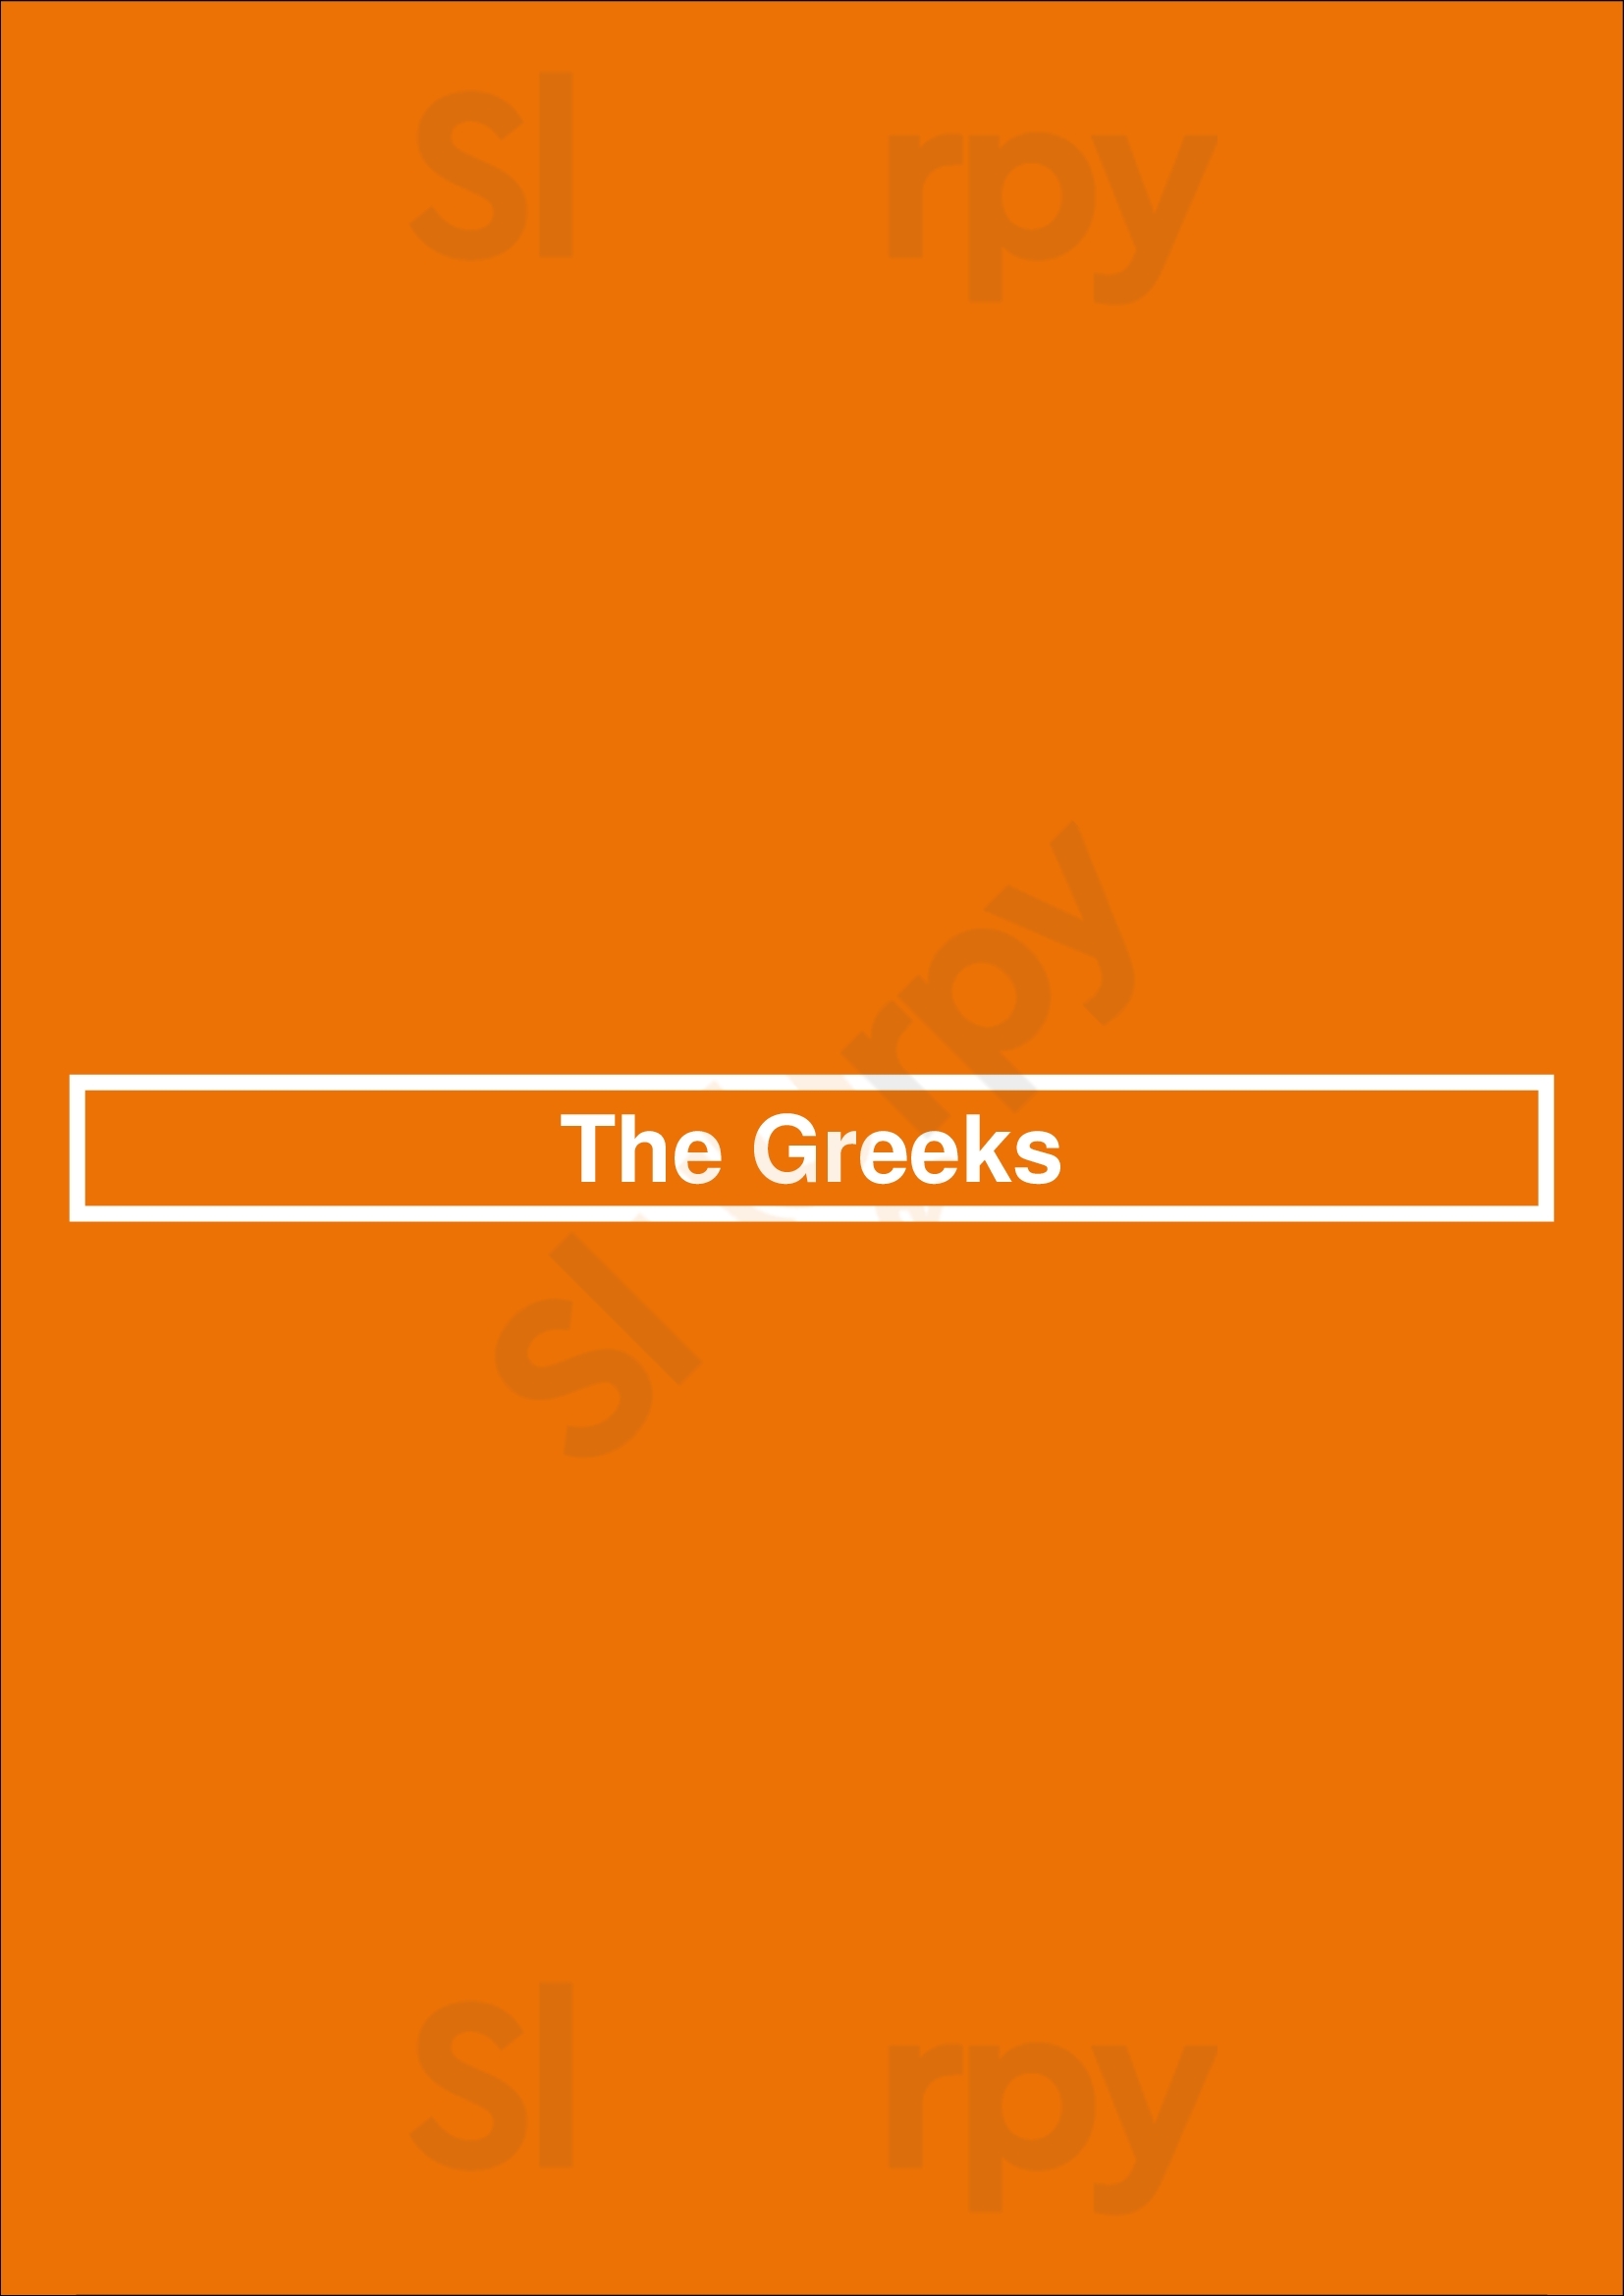 The Greeks Wilmington Menu - 1